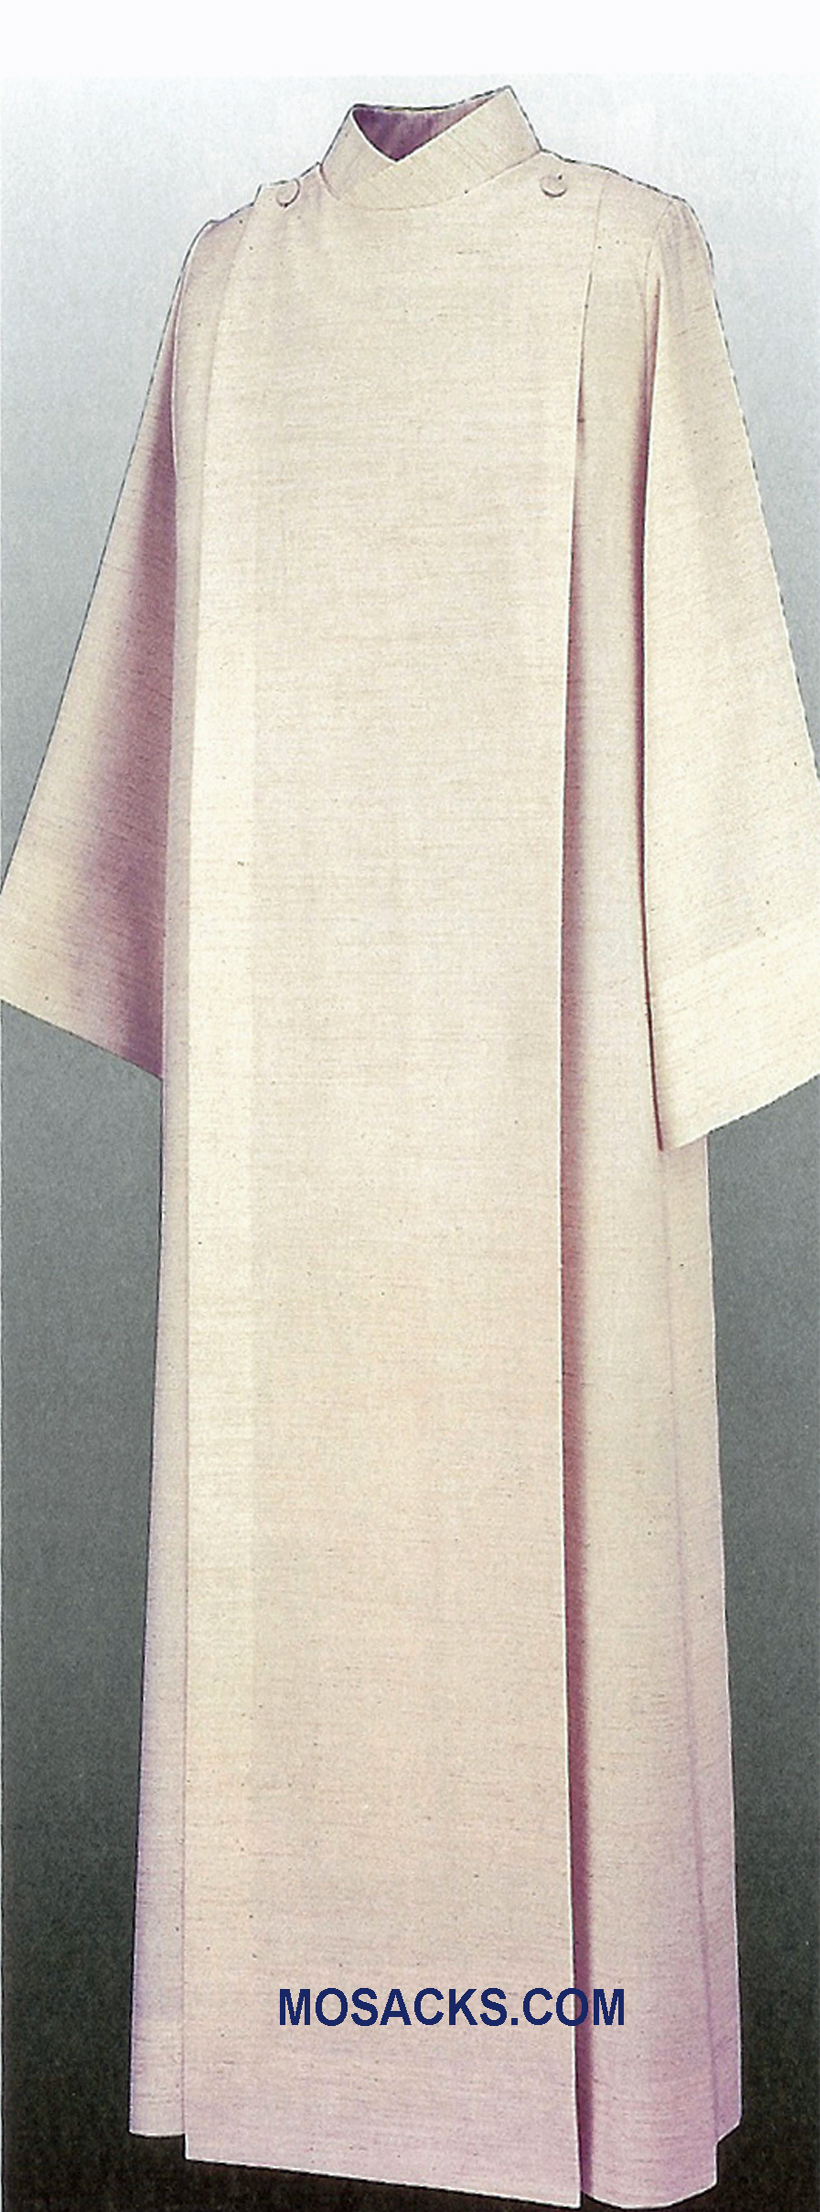 Slabbinck Alb in White Jersey Fabric, Style 11